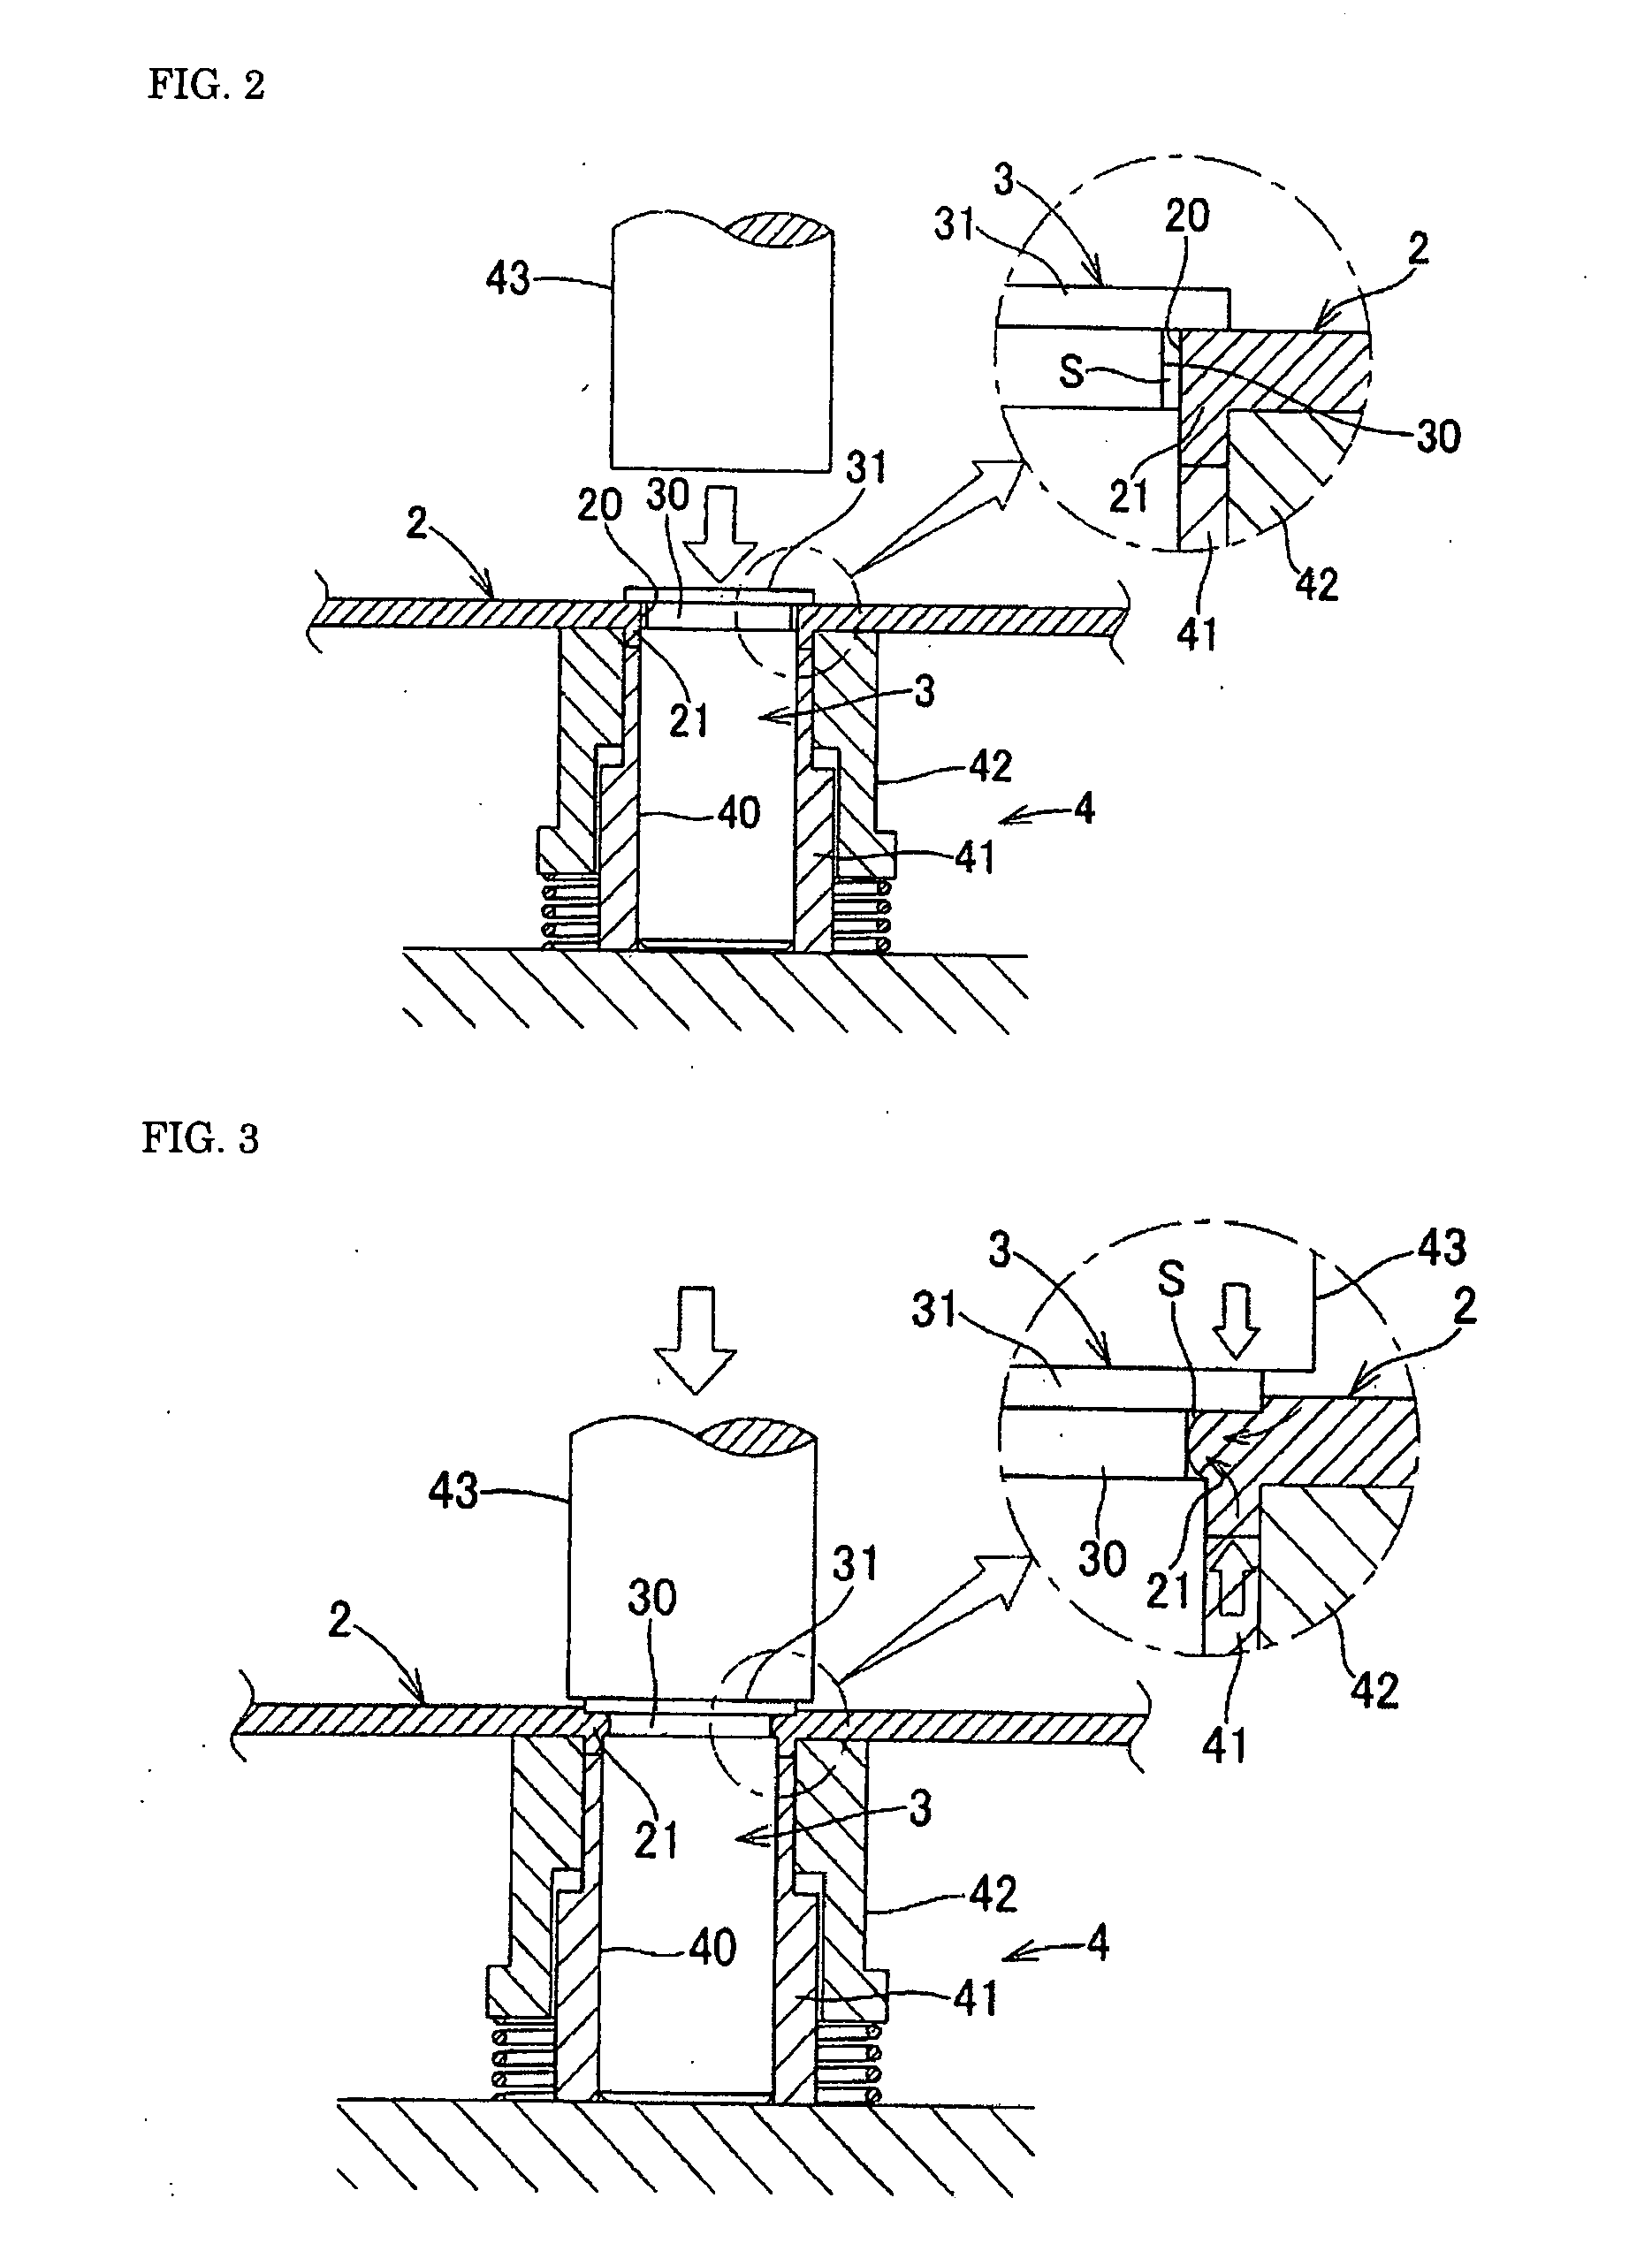 Manufacturing method of caulking-assembled part